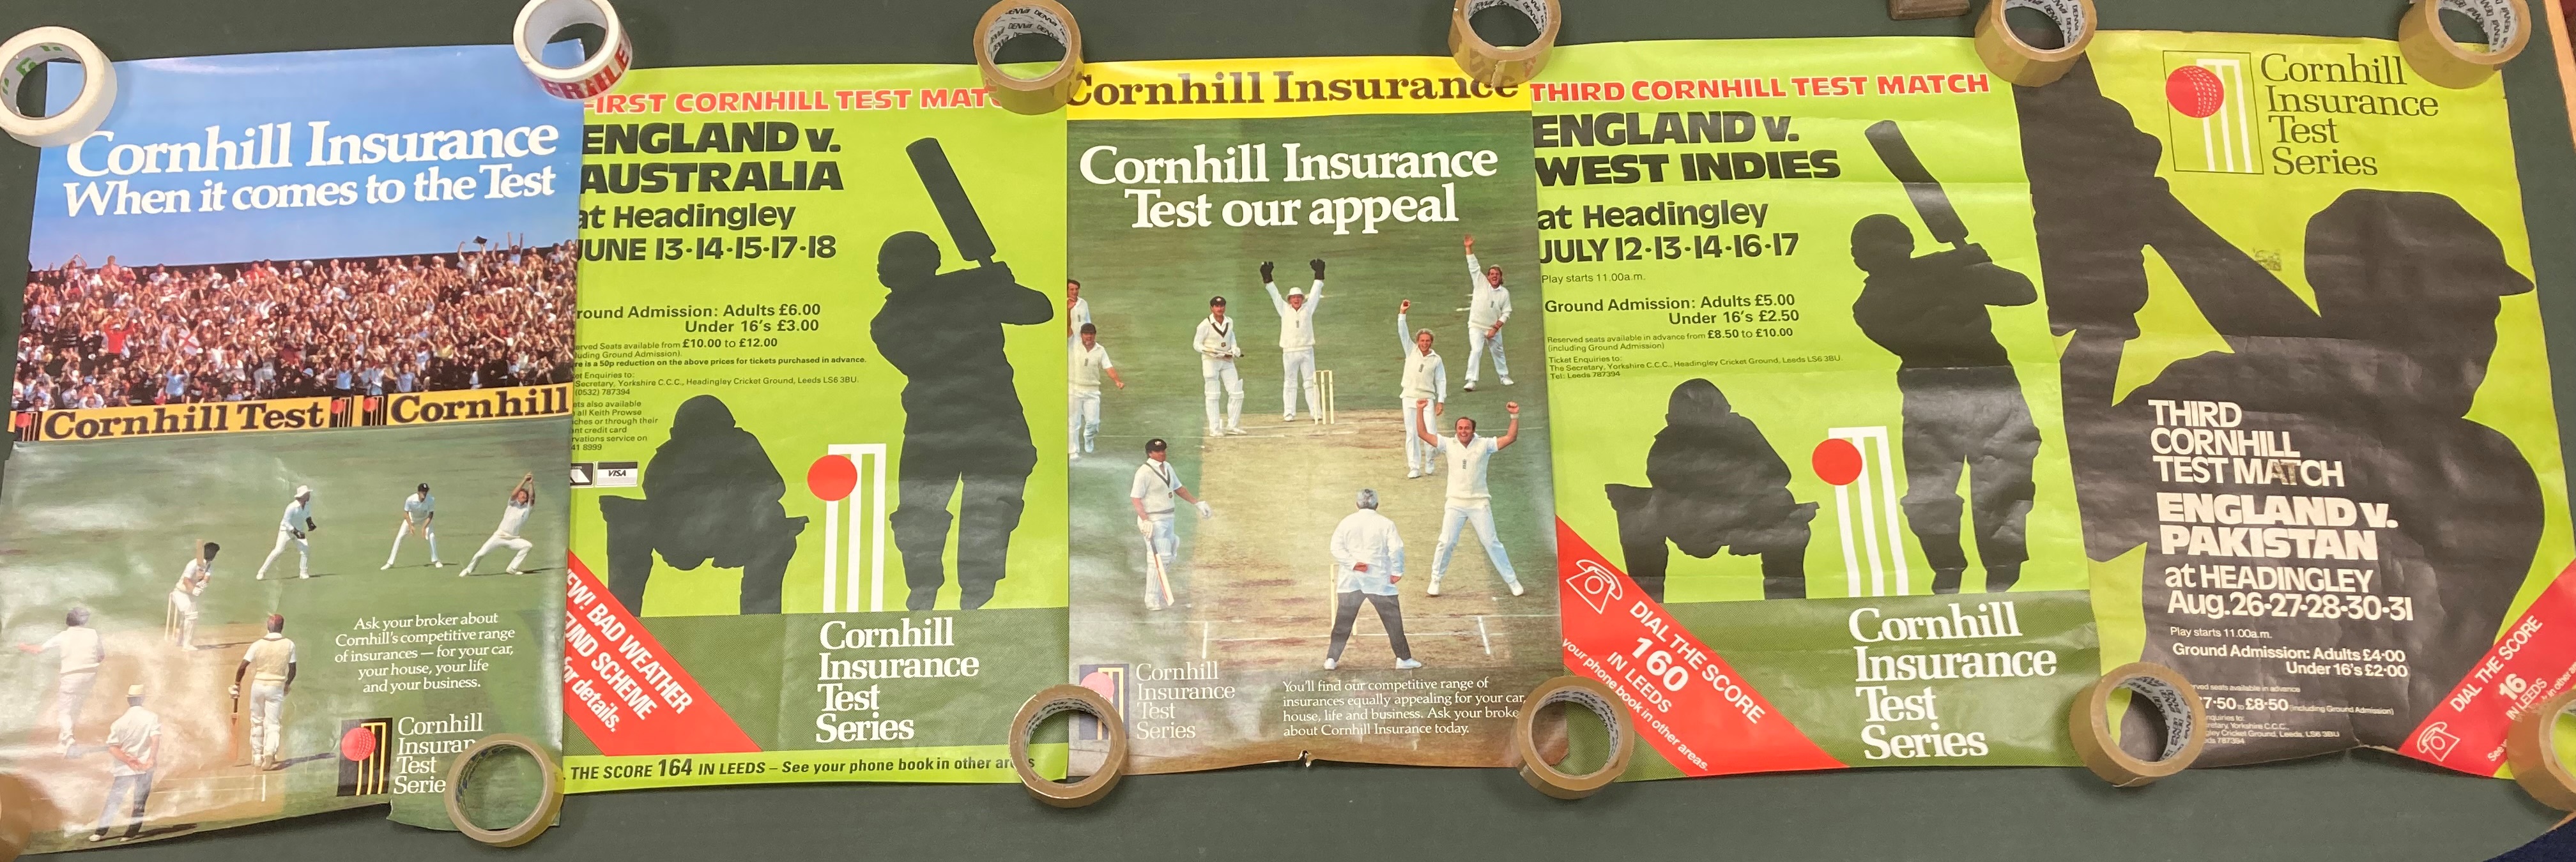 Five Cricket related posters Cornhill Insurance sponsored including England vs Australia,